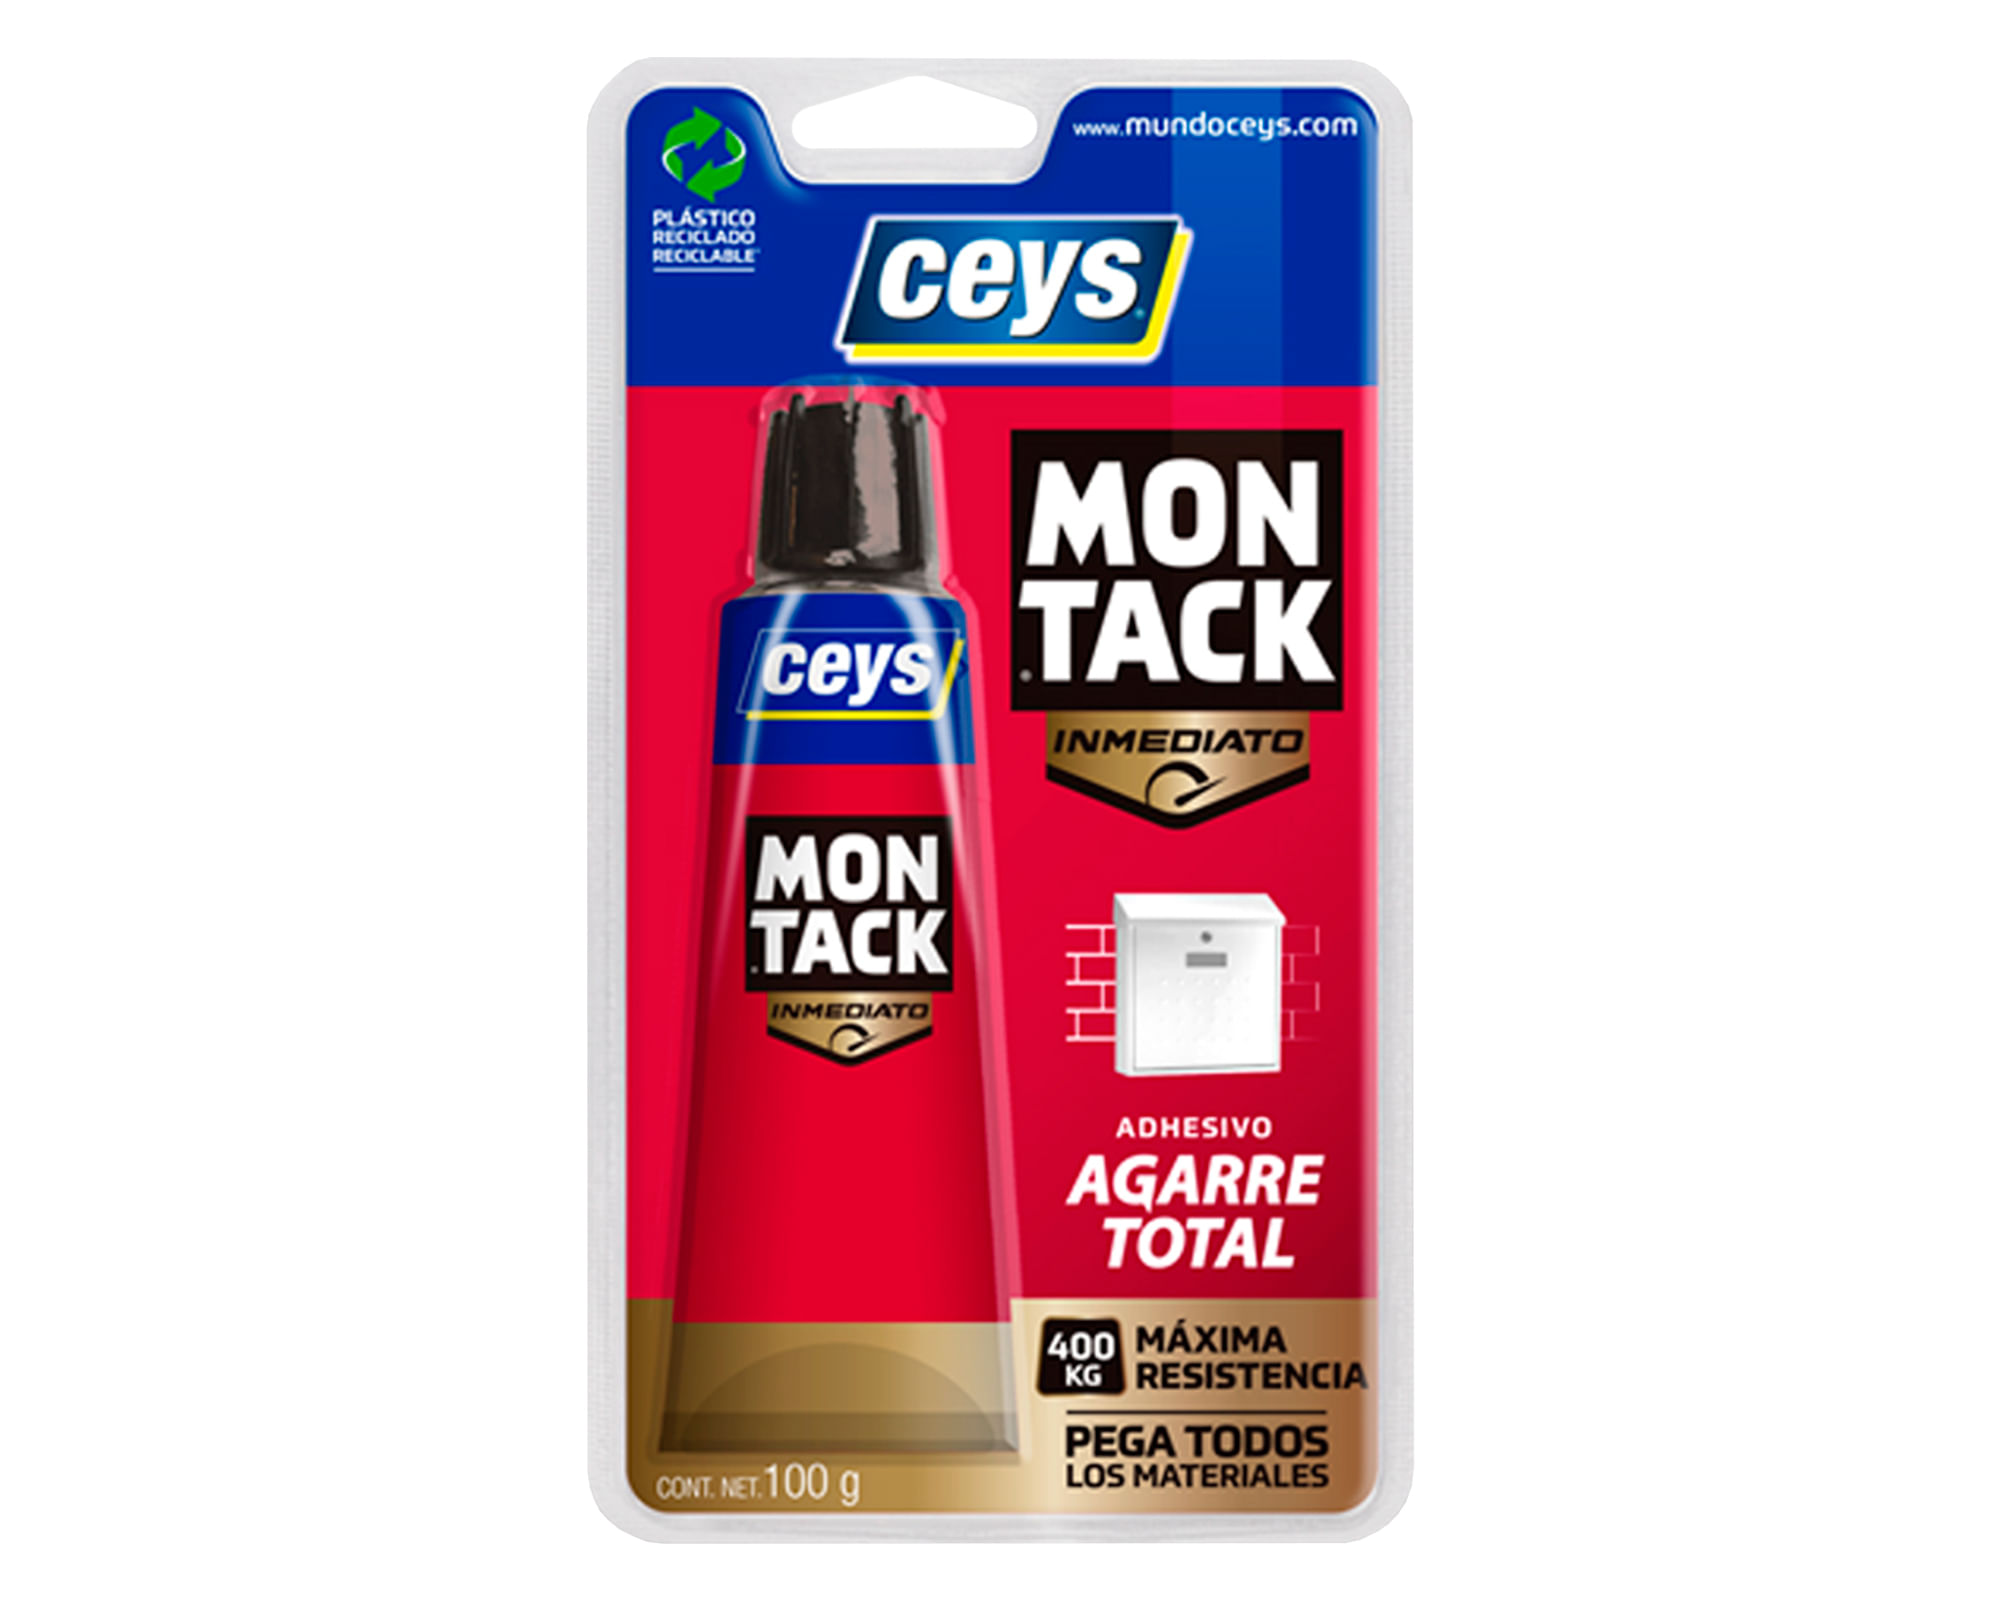 Adhesivo de montaje Ceys Montack Agarre Total